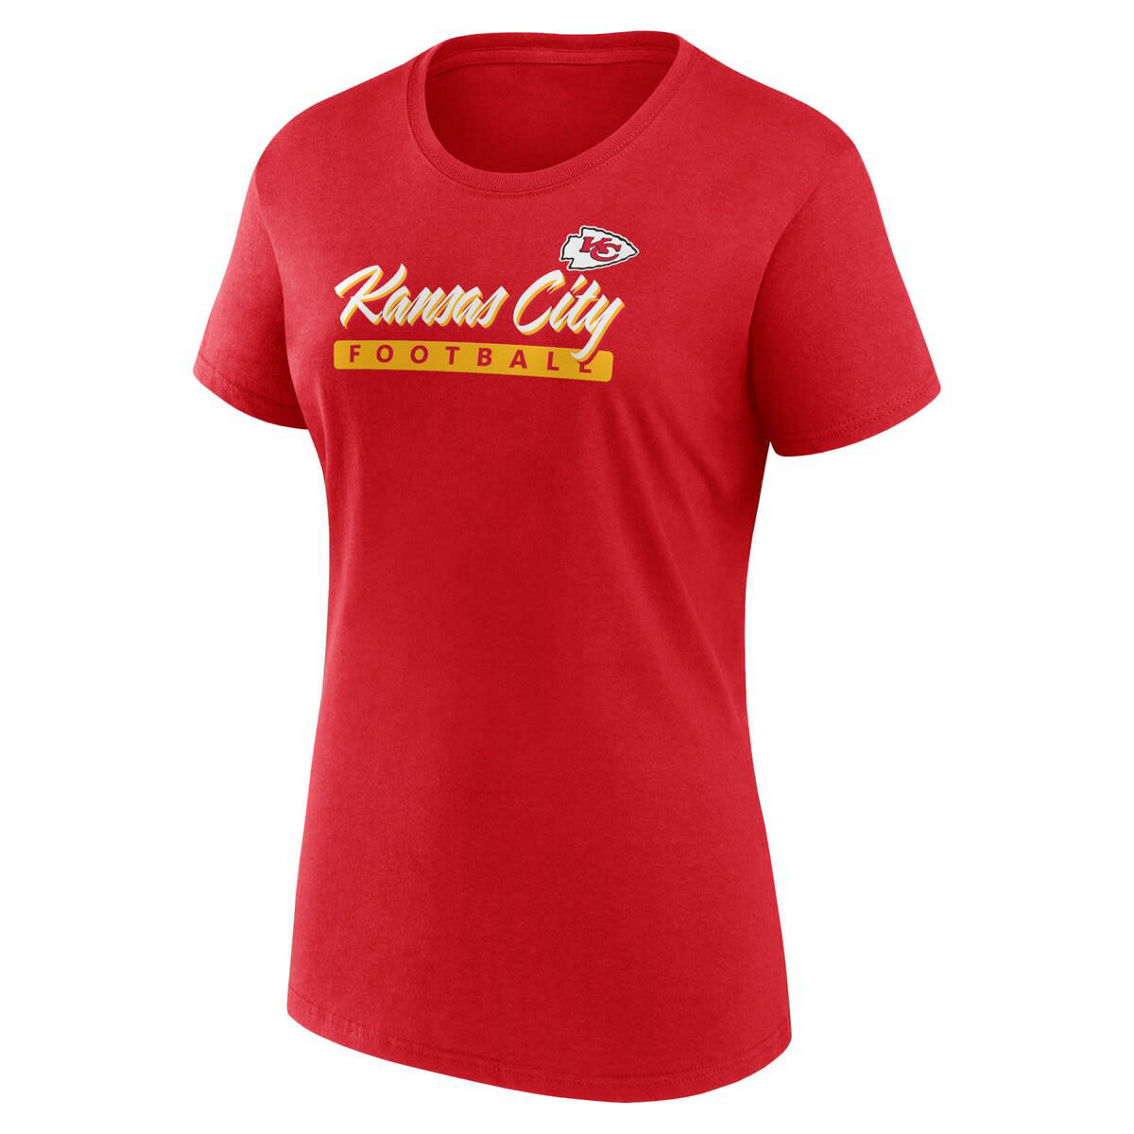 Fanatics Branded Women's Kansas City Chiefs Risk T-Shirt Combo Pack - Image 3 of 4